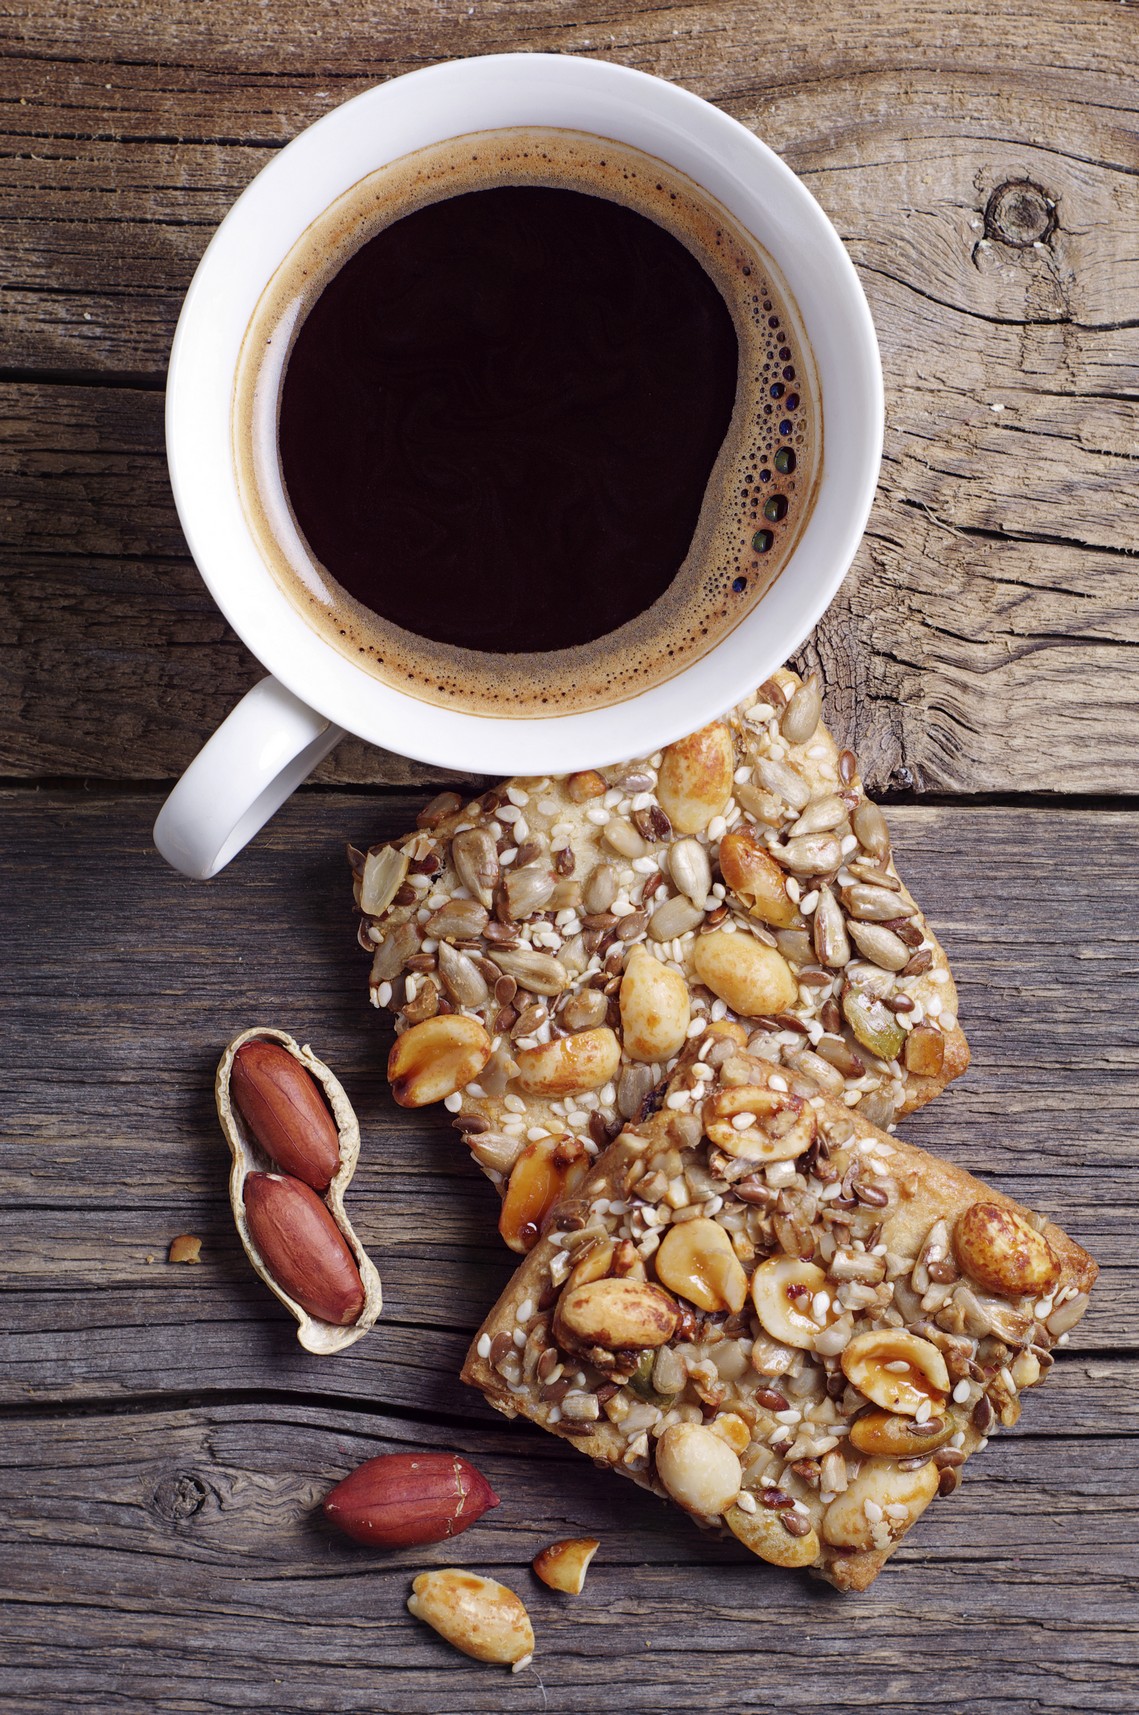 Philadelphia Micro-Market | Bean-to-Cup Coffee | Break Room for Employees